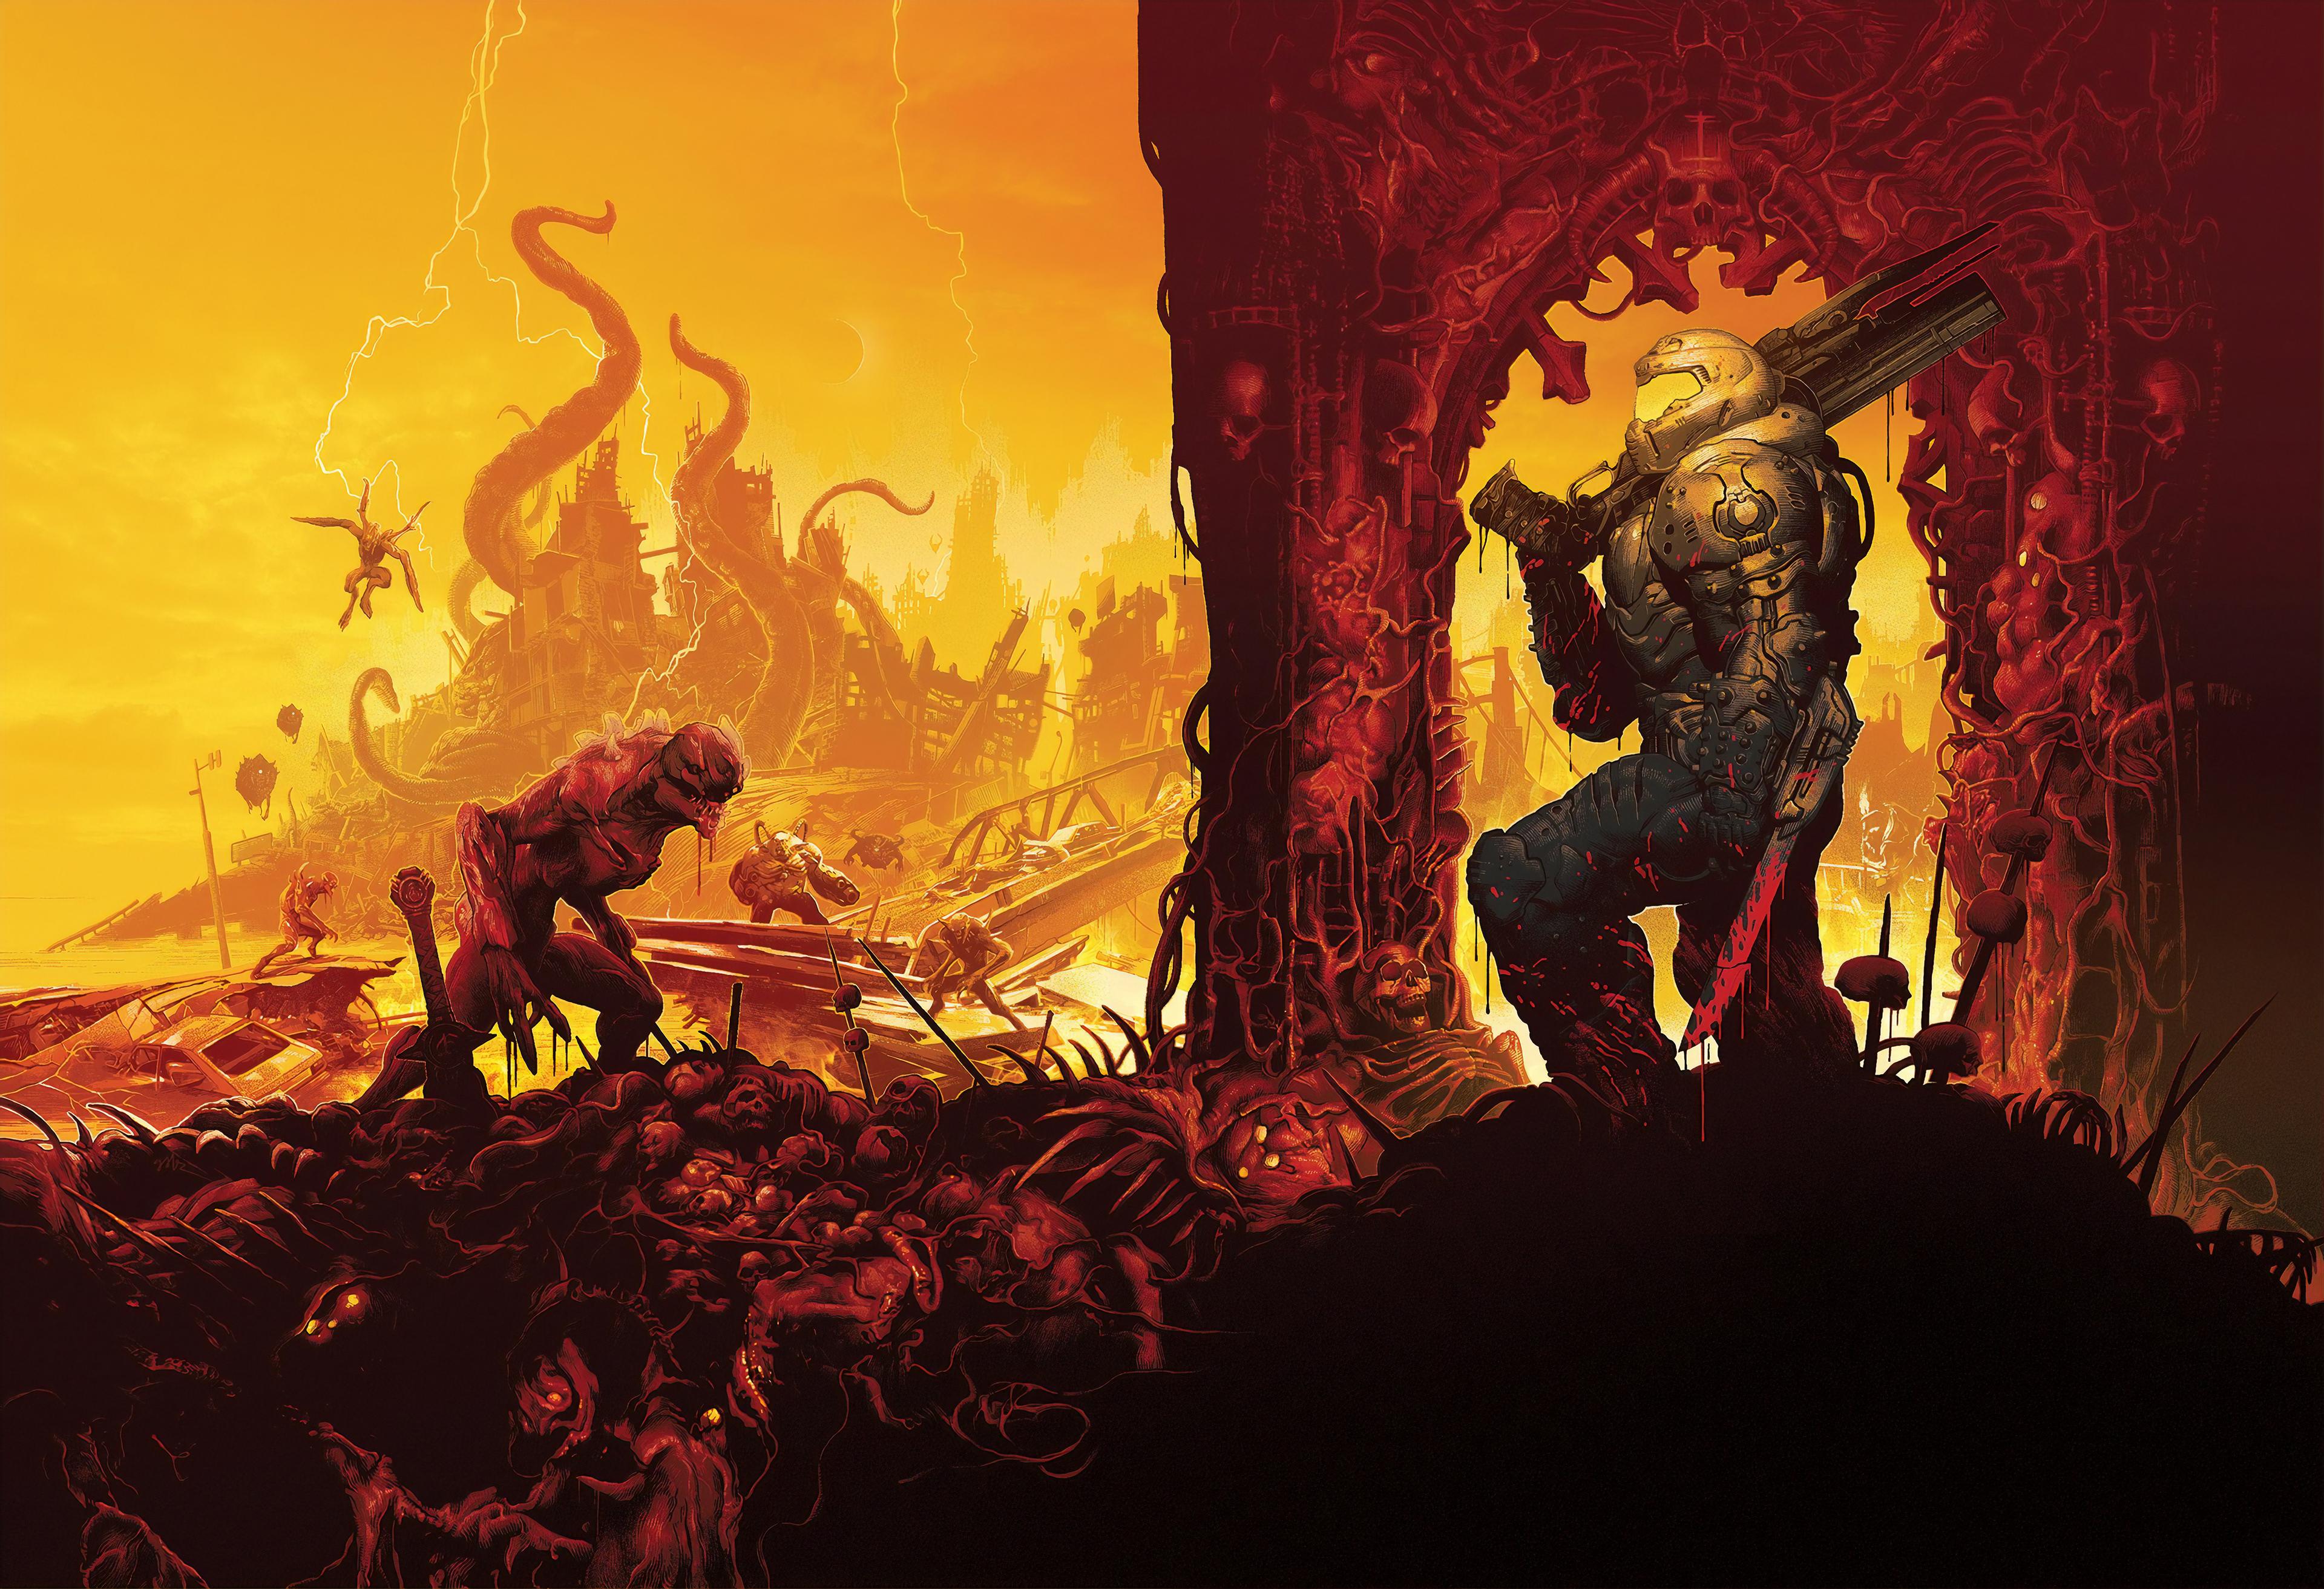 Doom Eternal 4k 2019, HD Games, 4k Wallpapers, Image